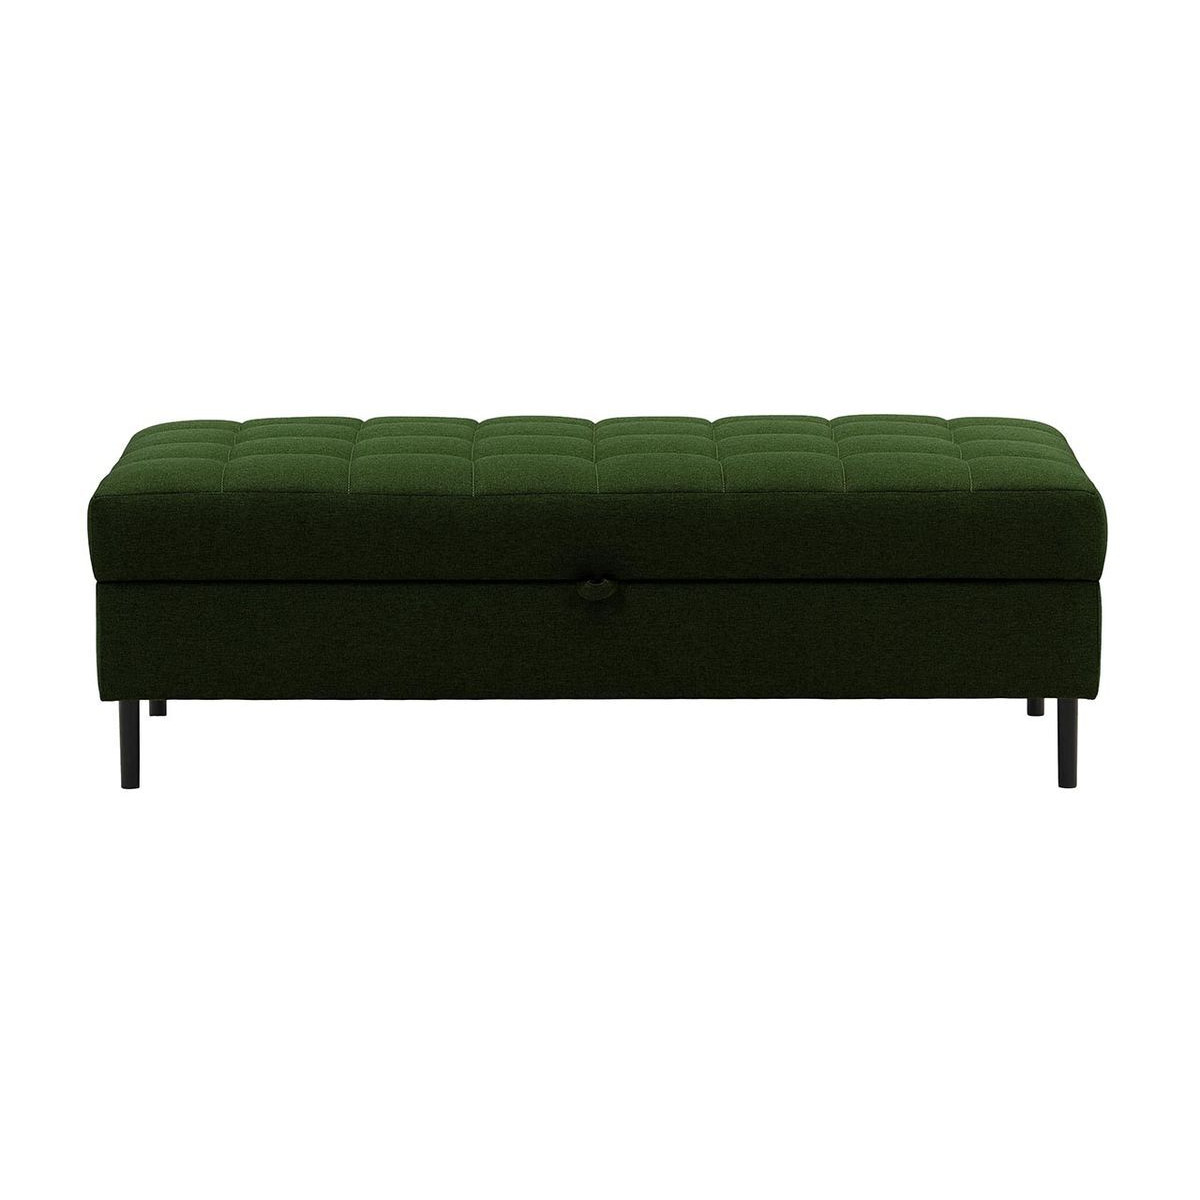 Ludo Footstool with Storage, dark green - image 1